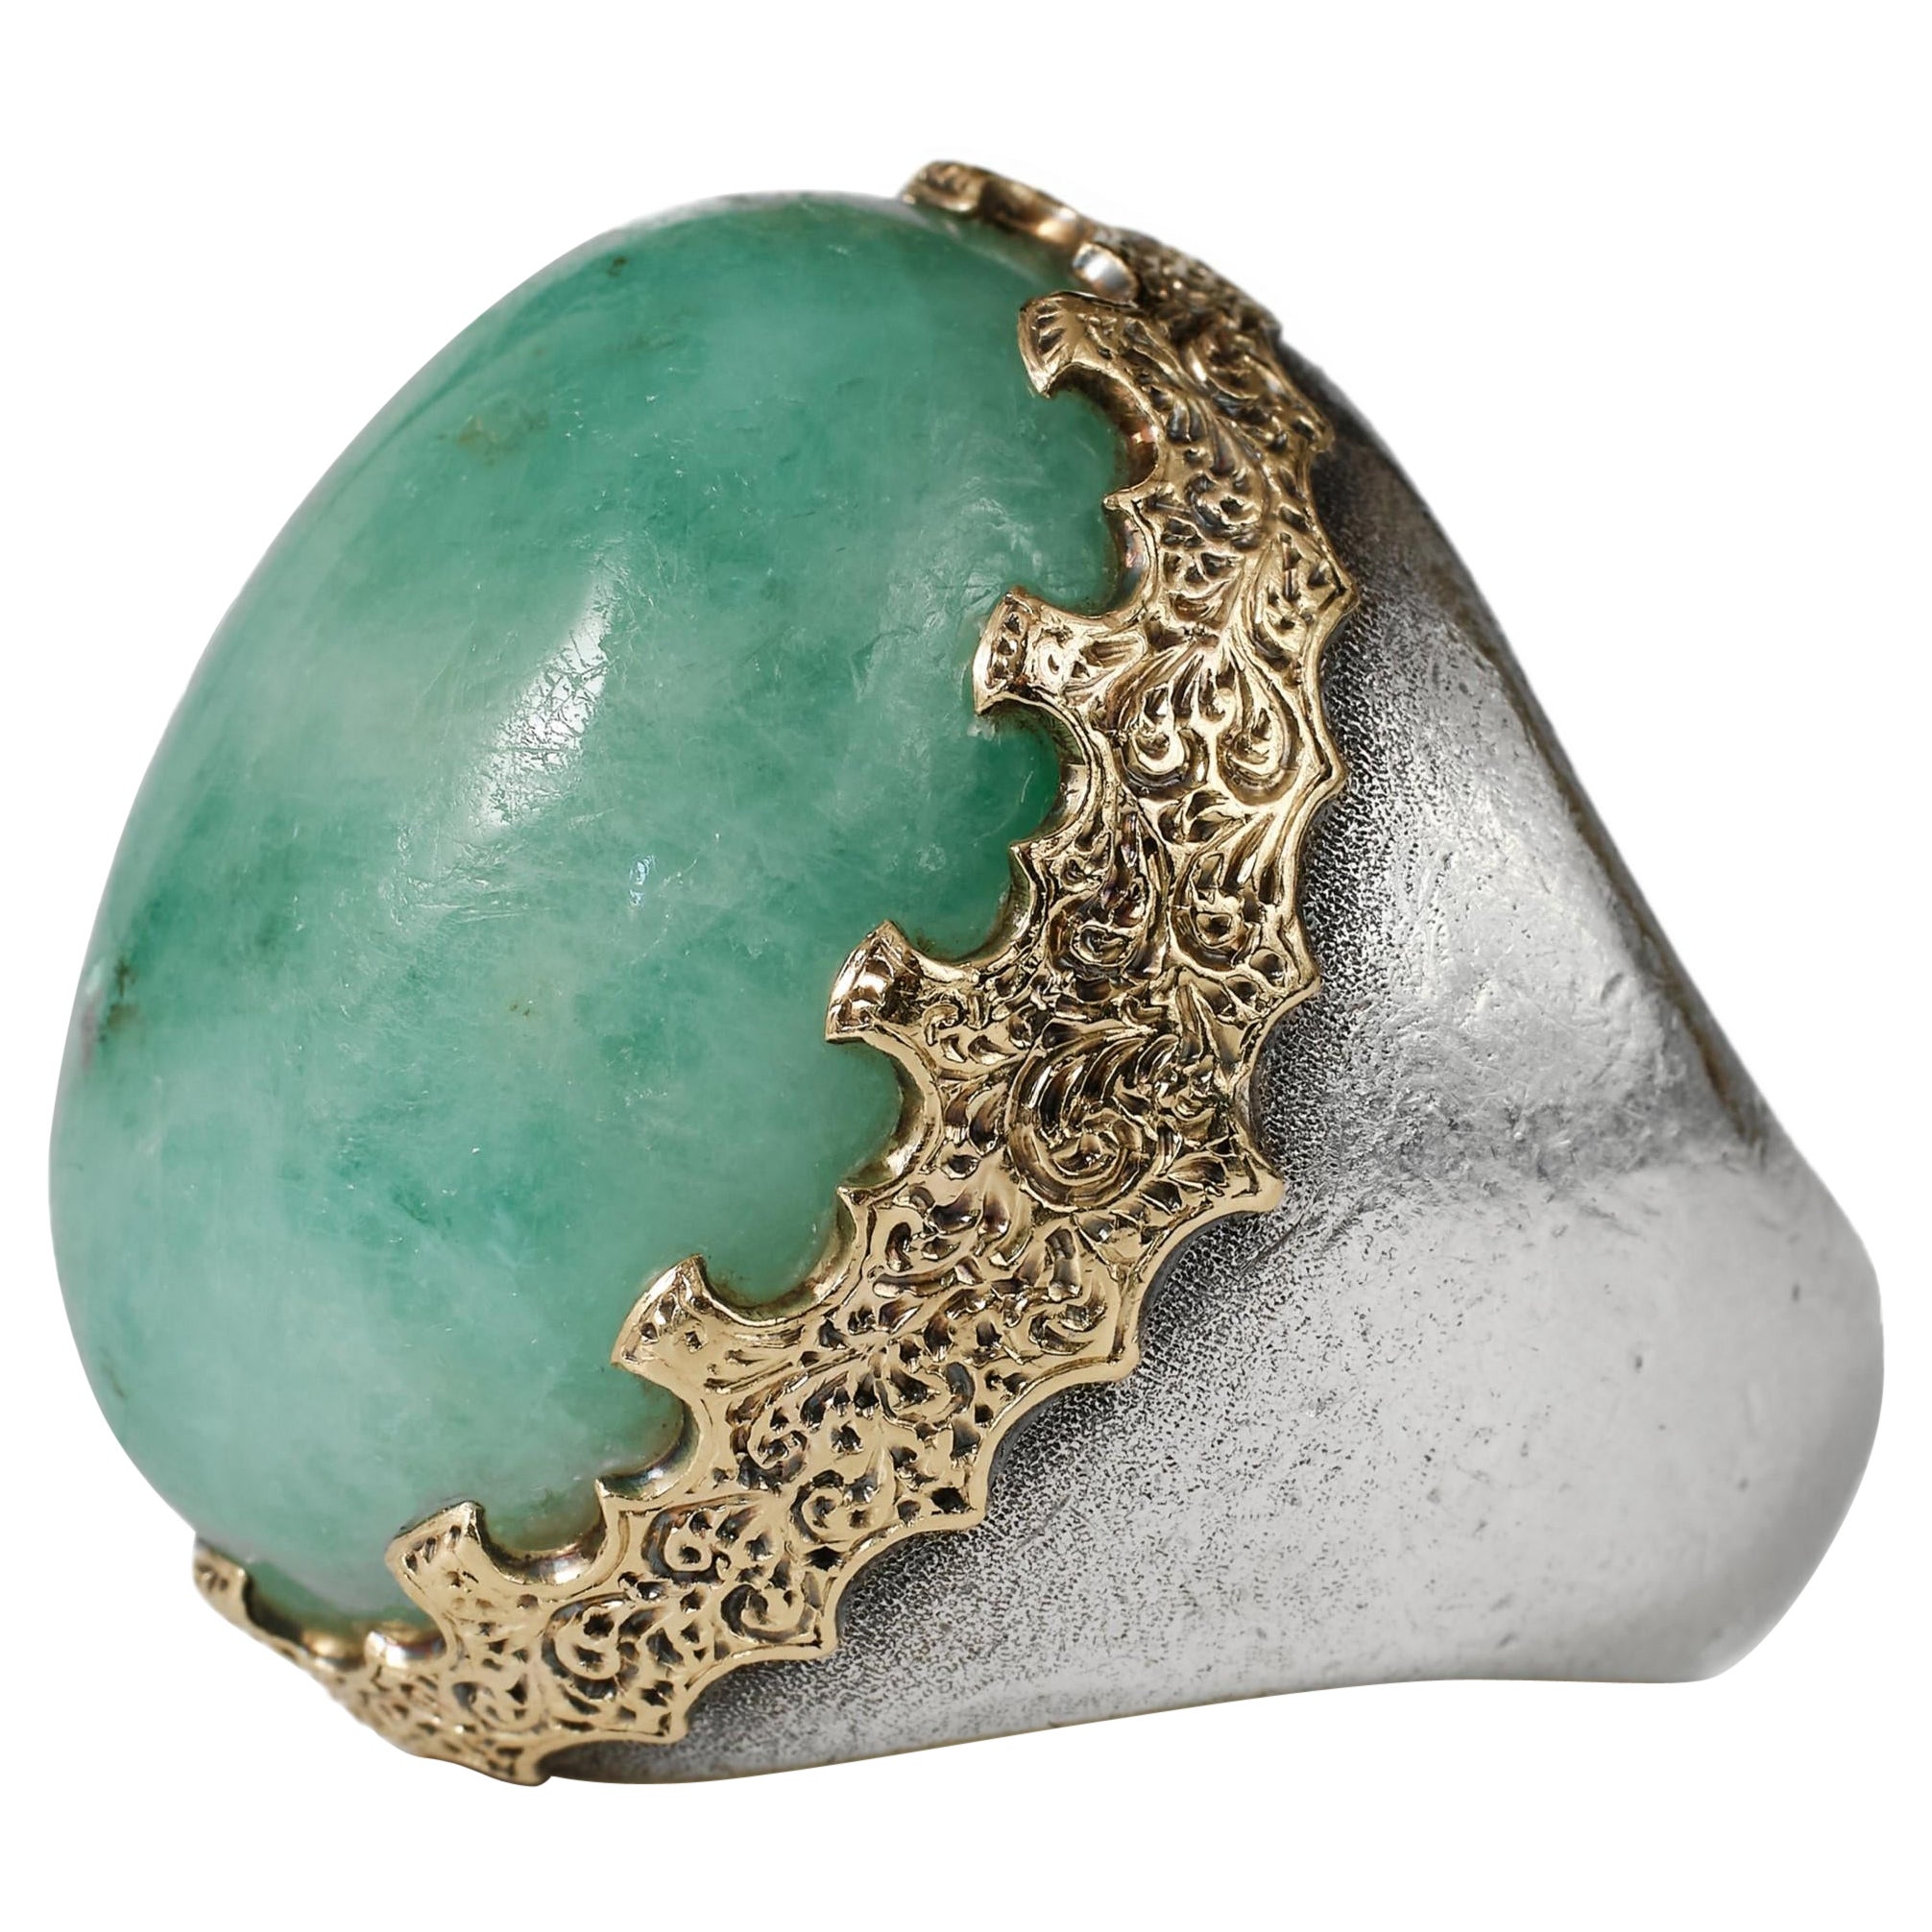 Vintage 1960s Mario Buccellati ring with 39 carat jade nephrite